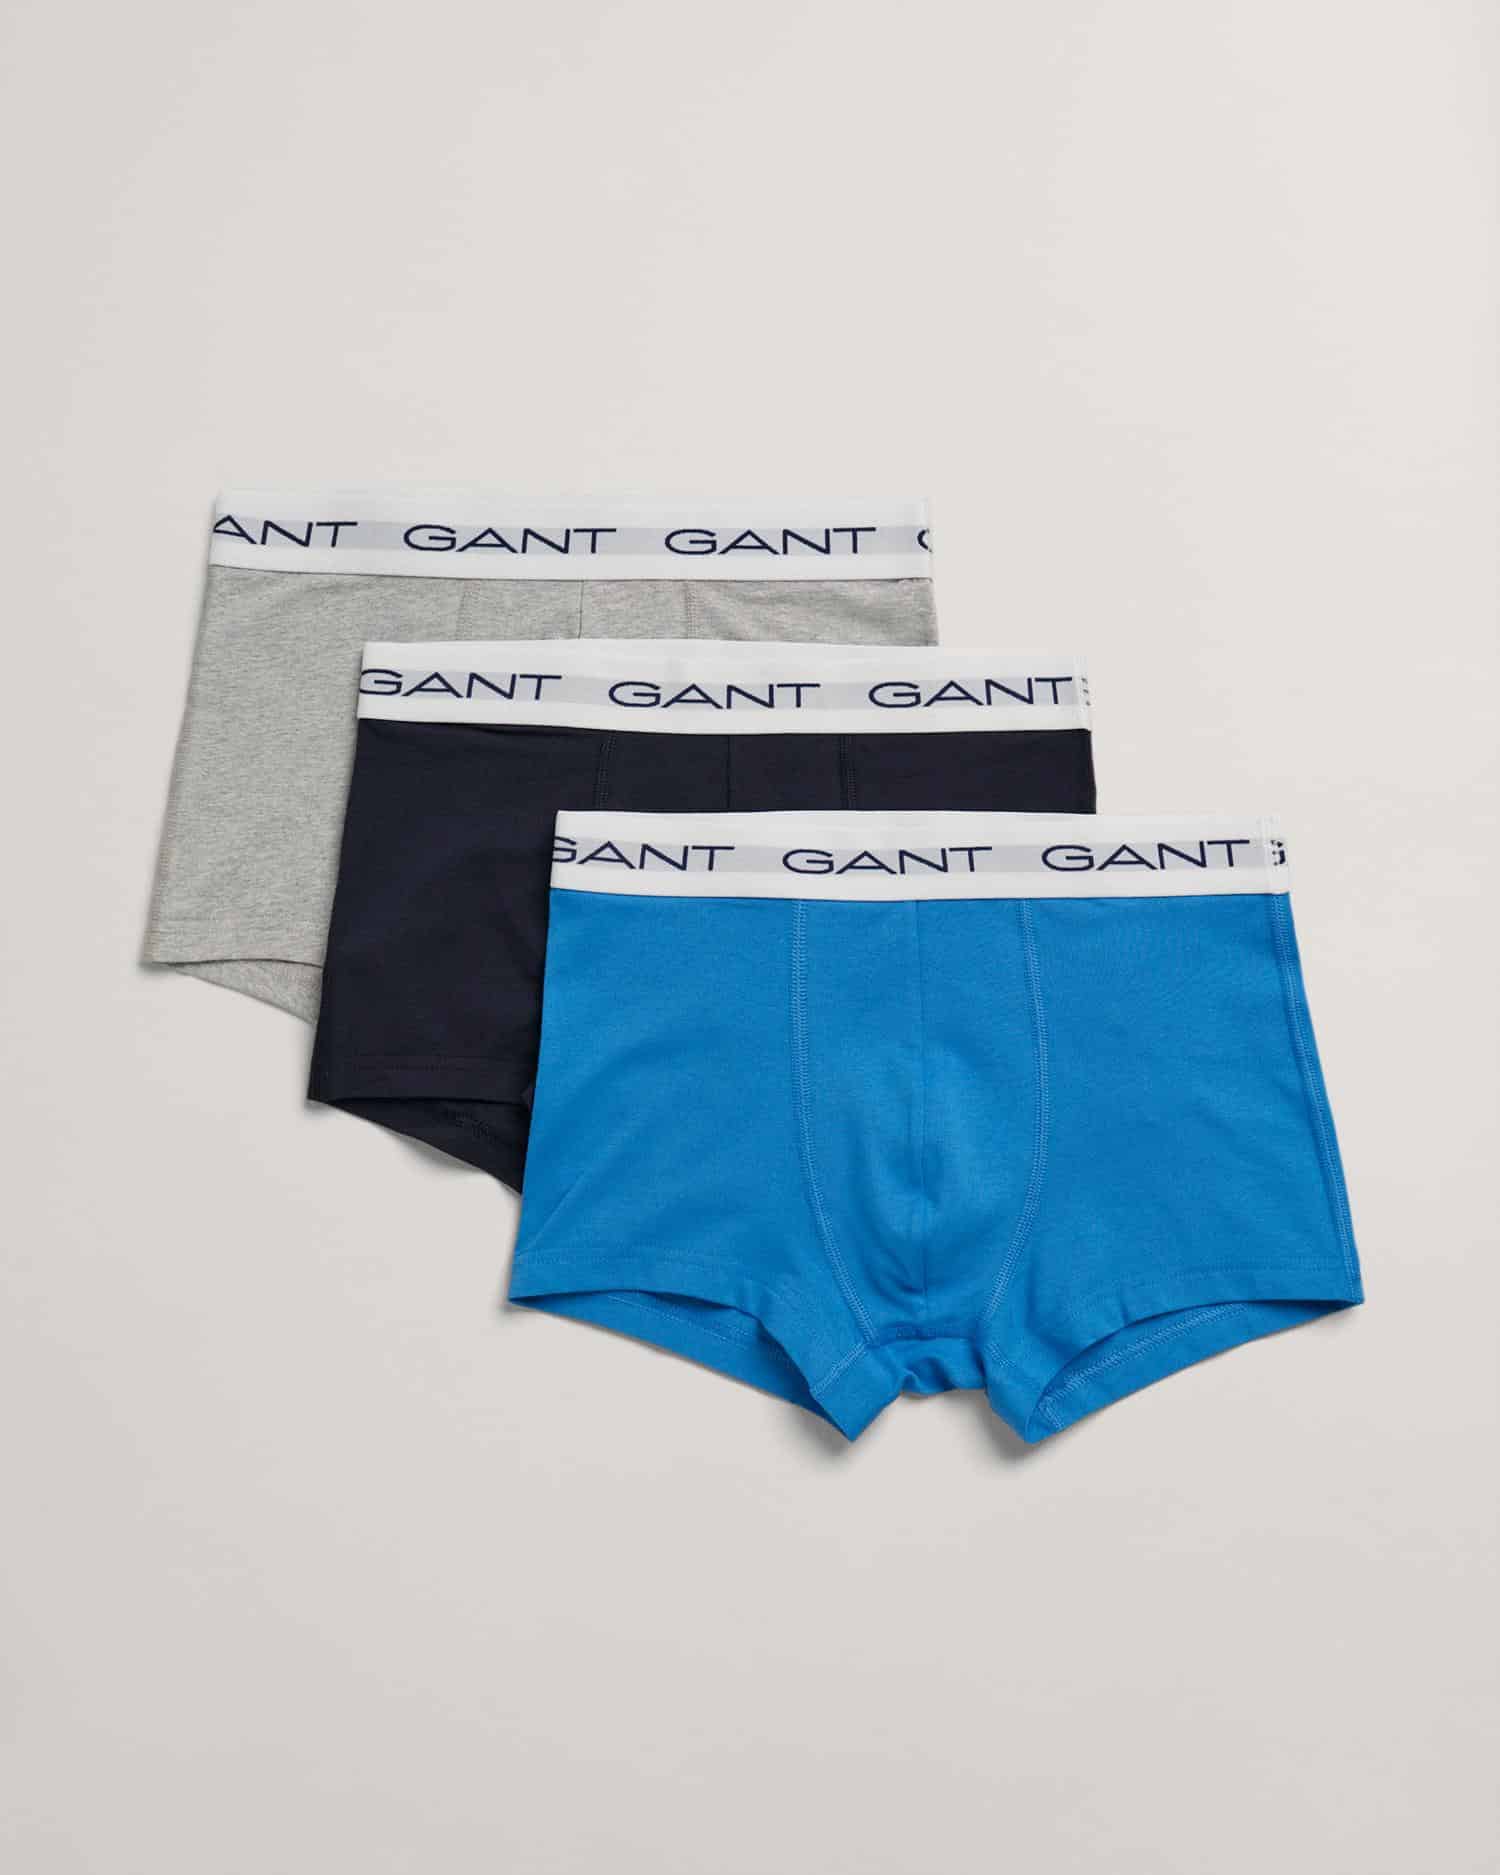 Gant boxer shorts for boys blue, black and grey